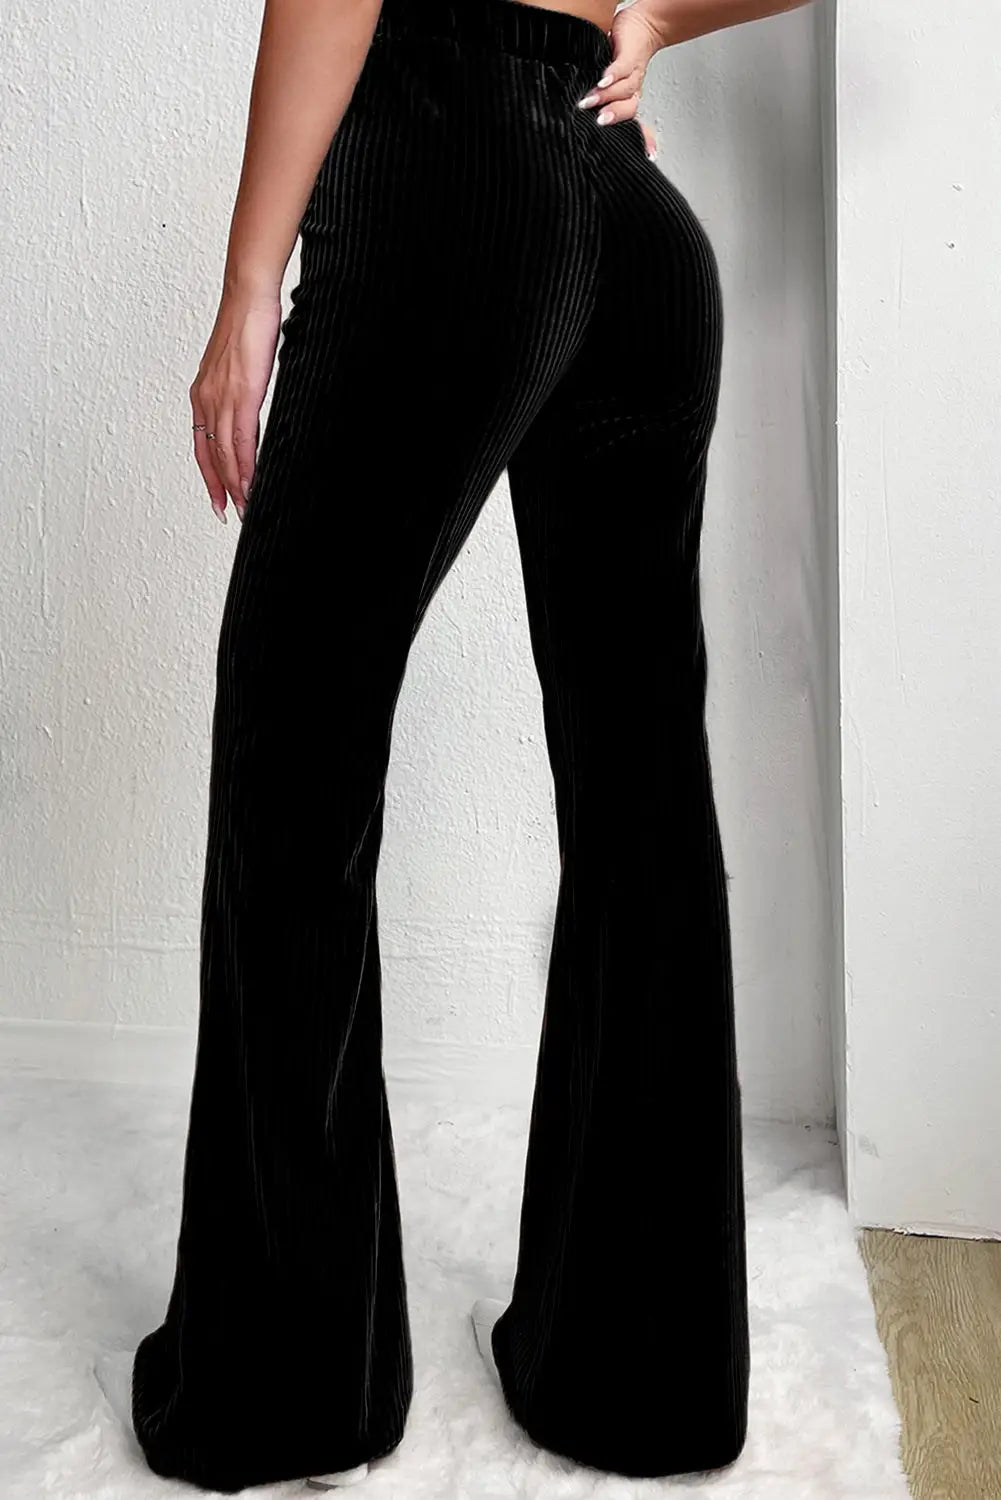 Black solid color high waist flare corduroy pants - wide leg